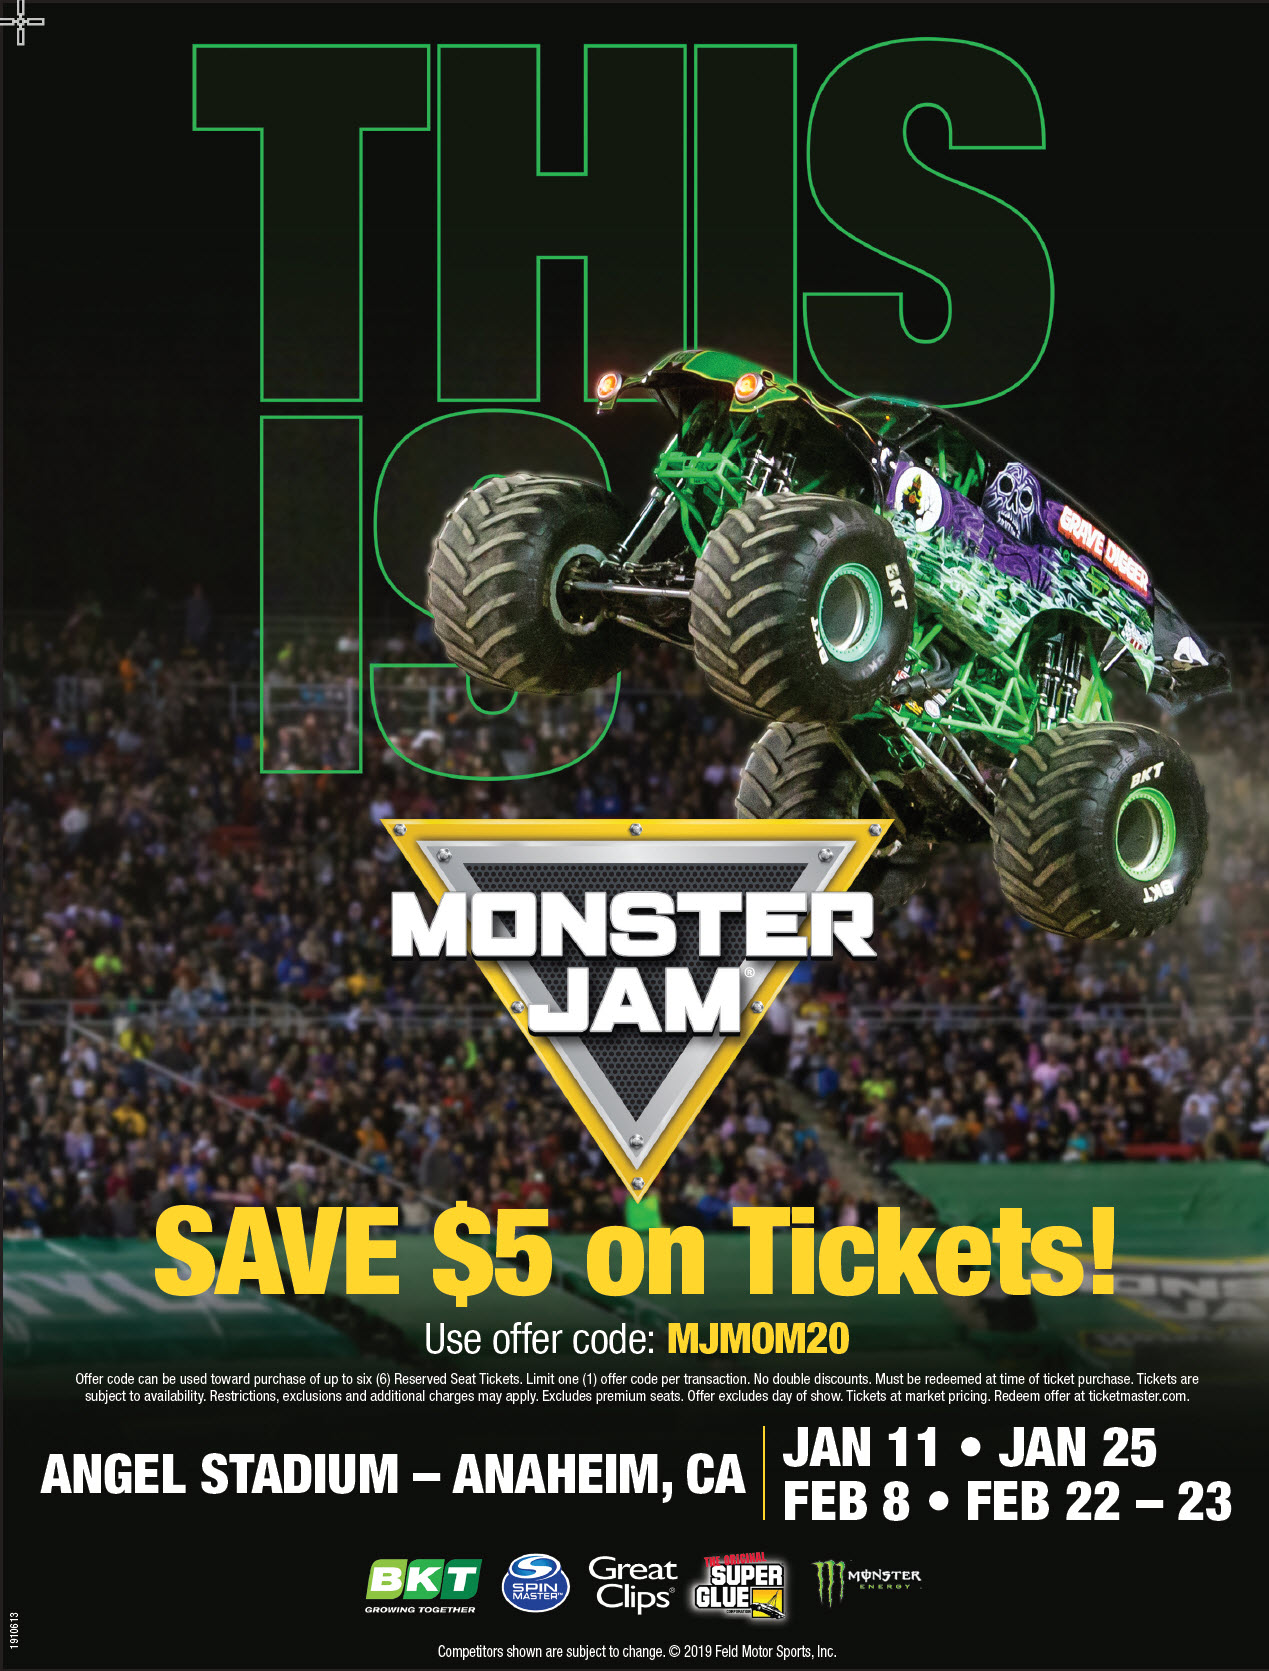 Monster Jam Anaheim California promotional poster. 